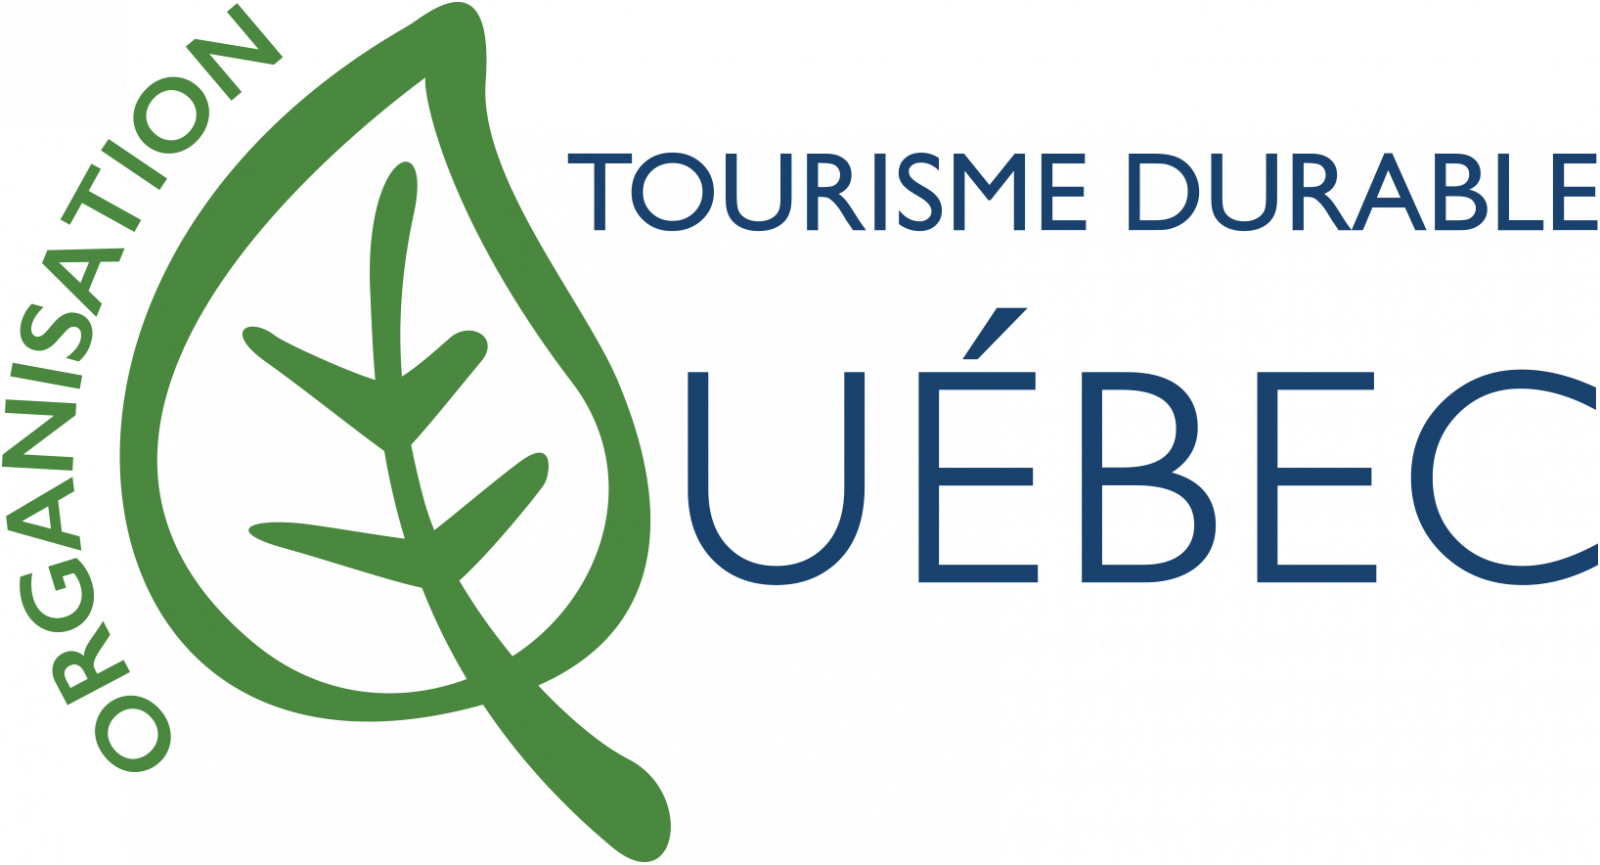 Organisation tourisme durable Quebec